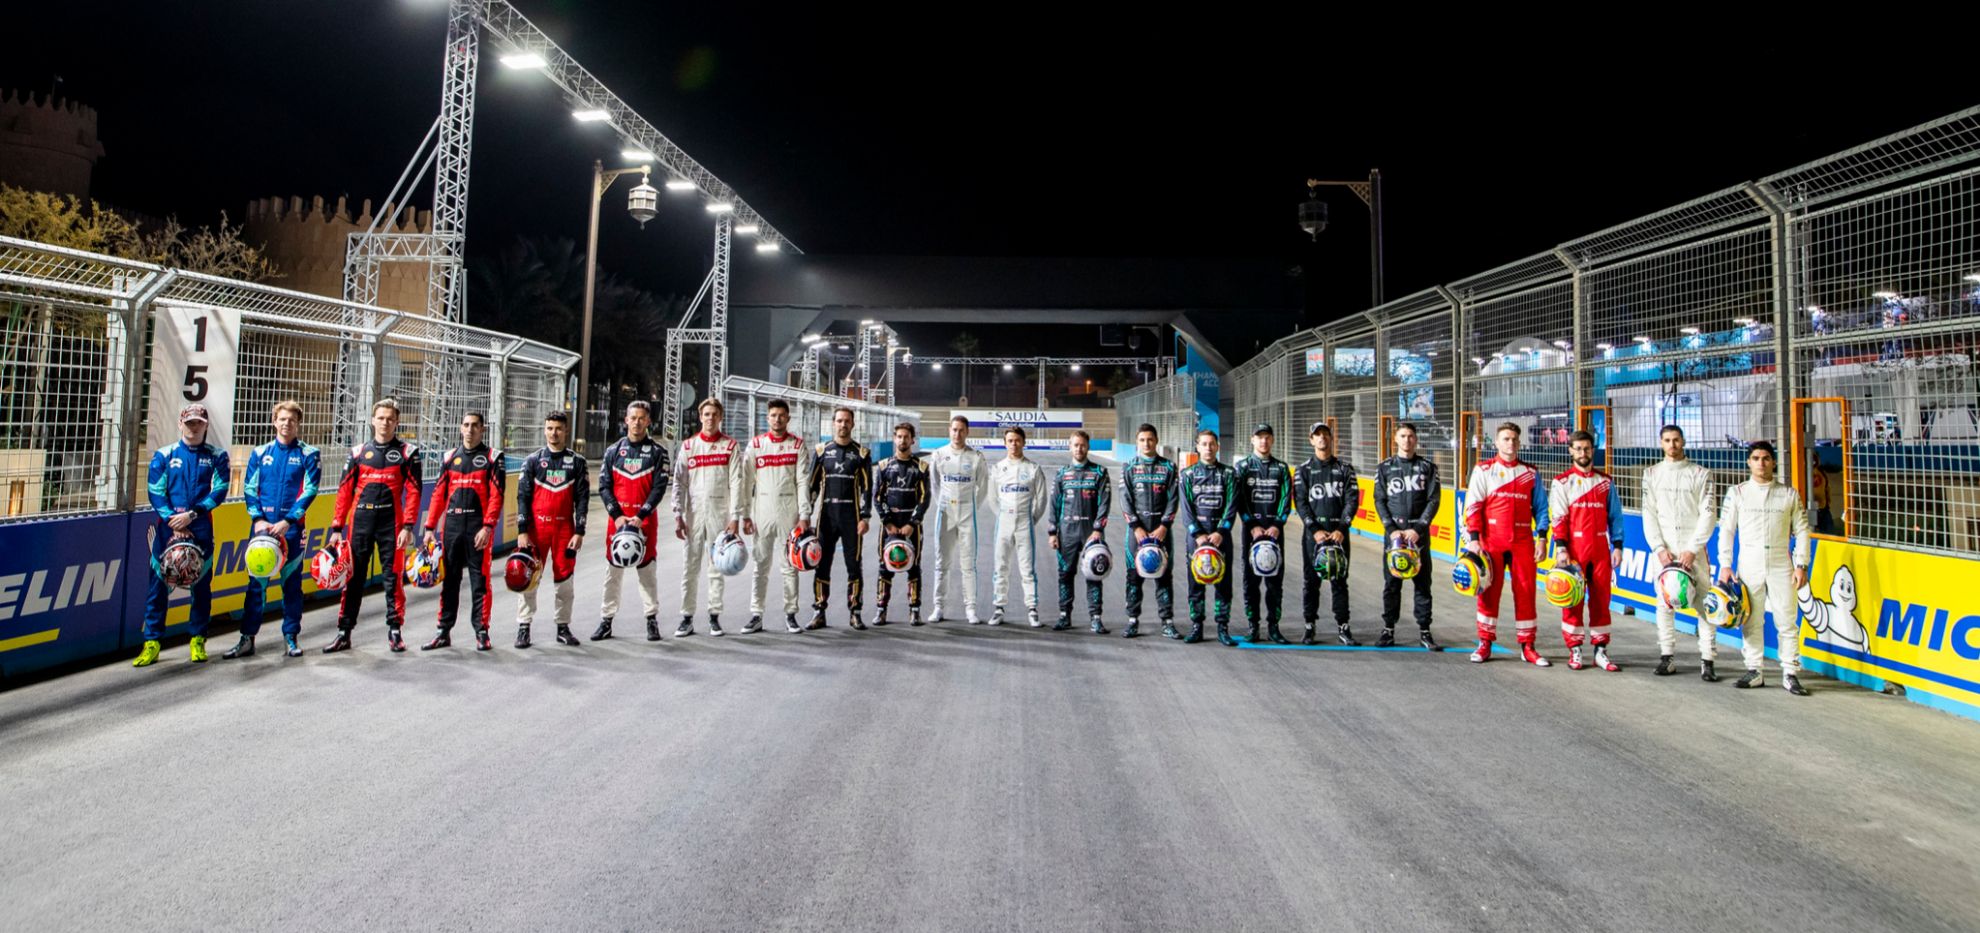 formula e 2022 - temporada 8 - diriyah e-prix - arabia saudi - pilotos - monoplazas electricos